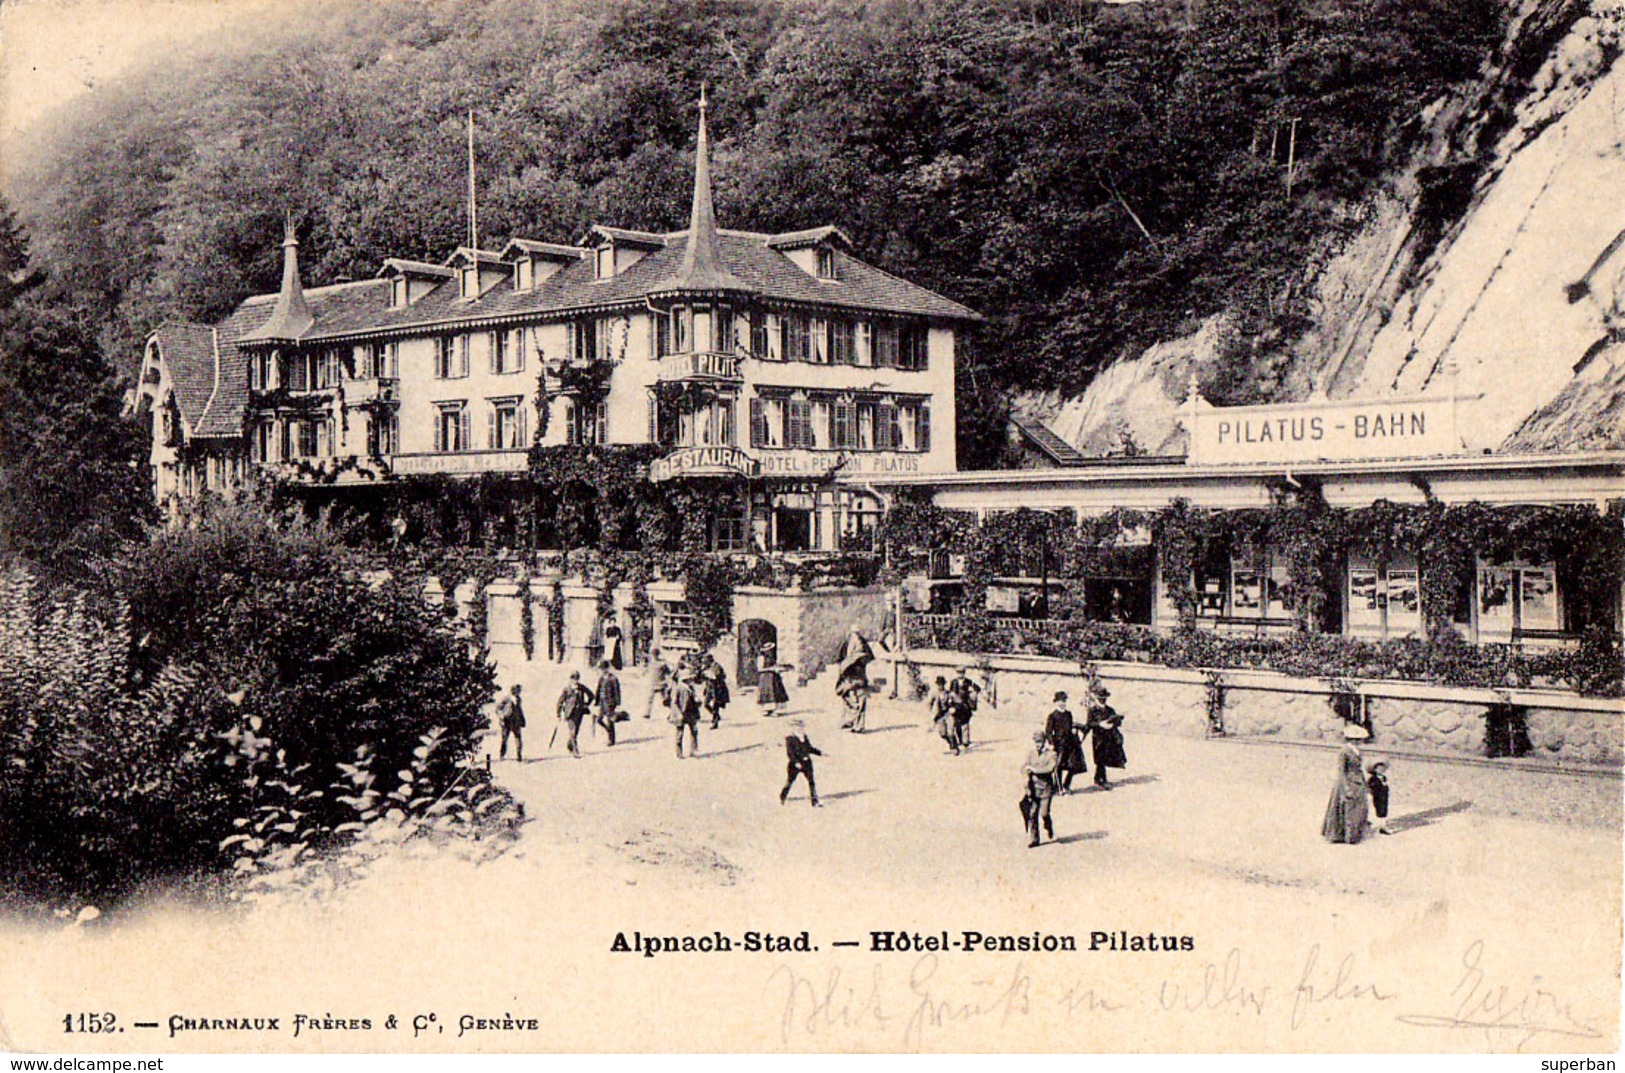 ALPNACH STAD : HÔTEL PENSION PILATUS / RESTAURANT / PILATUS - BAHN ~ 1900 (ae529) - Alpnach